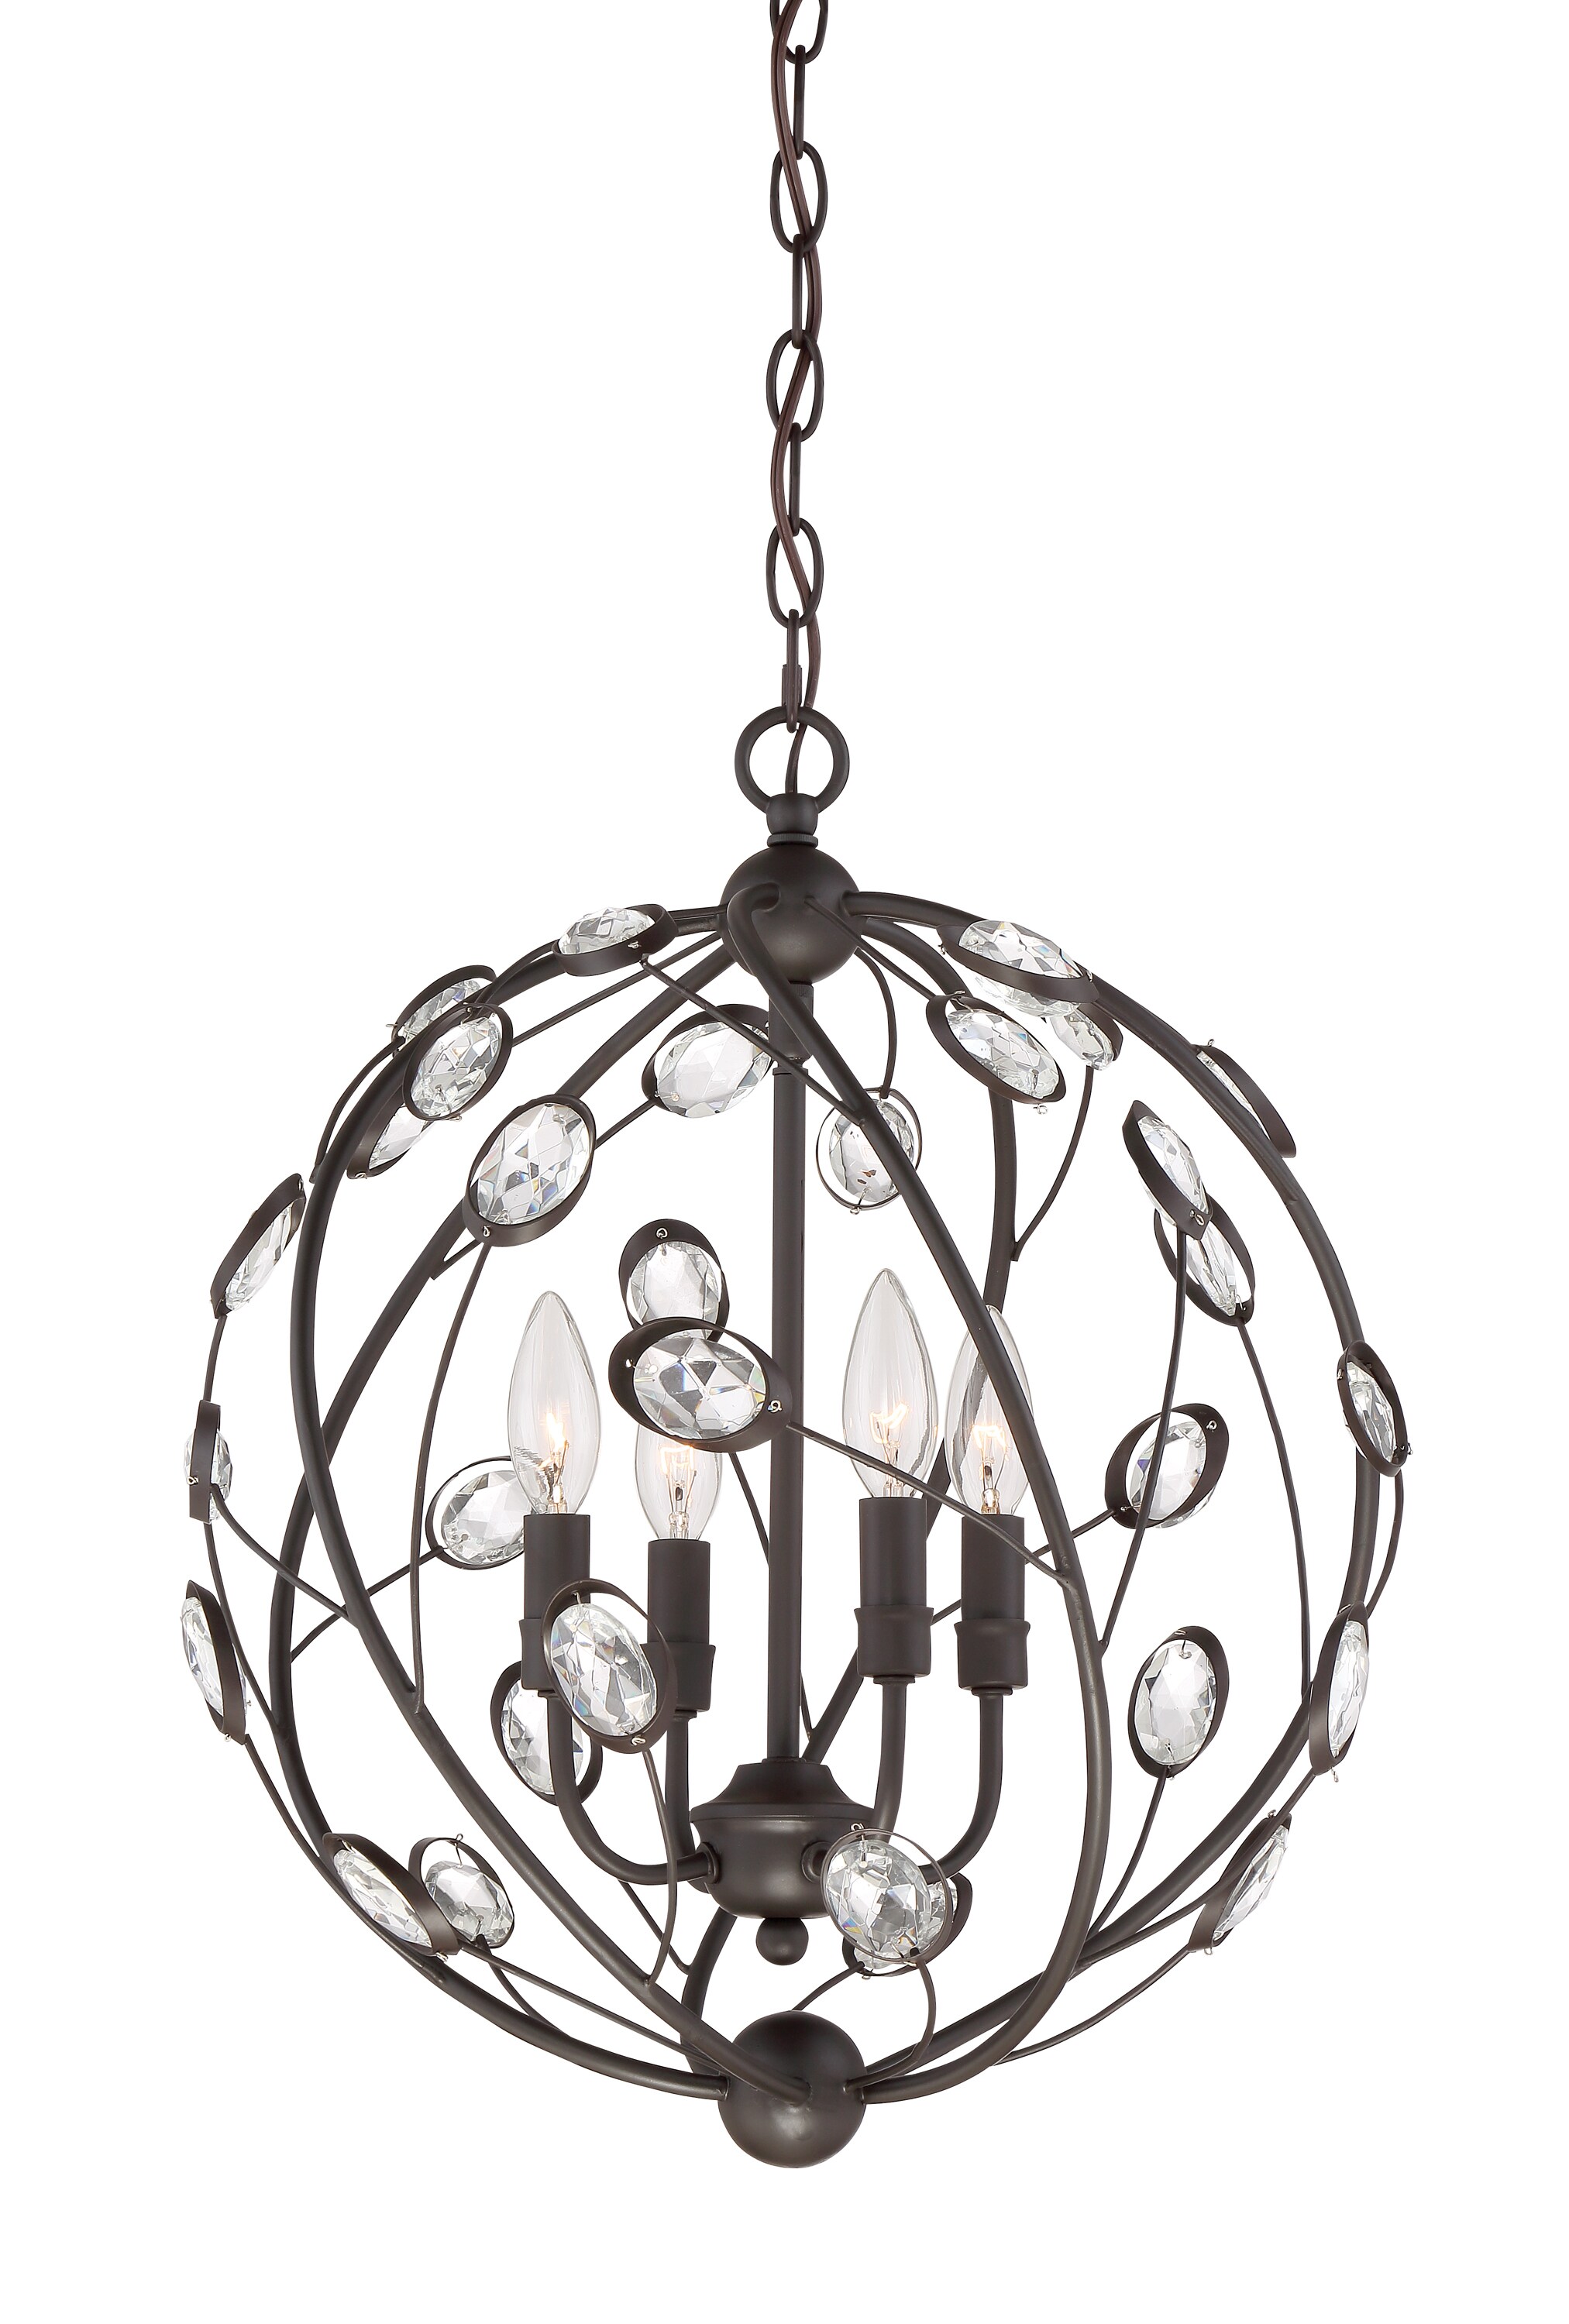 Quoizel Sedona 4-Light Bronze Transitional Globe Outdoor Hanging Pendant  Light in the Pendant Lighting department at